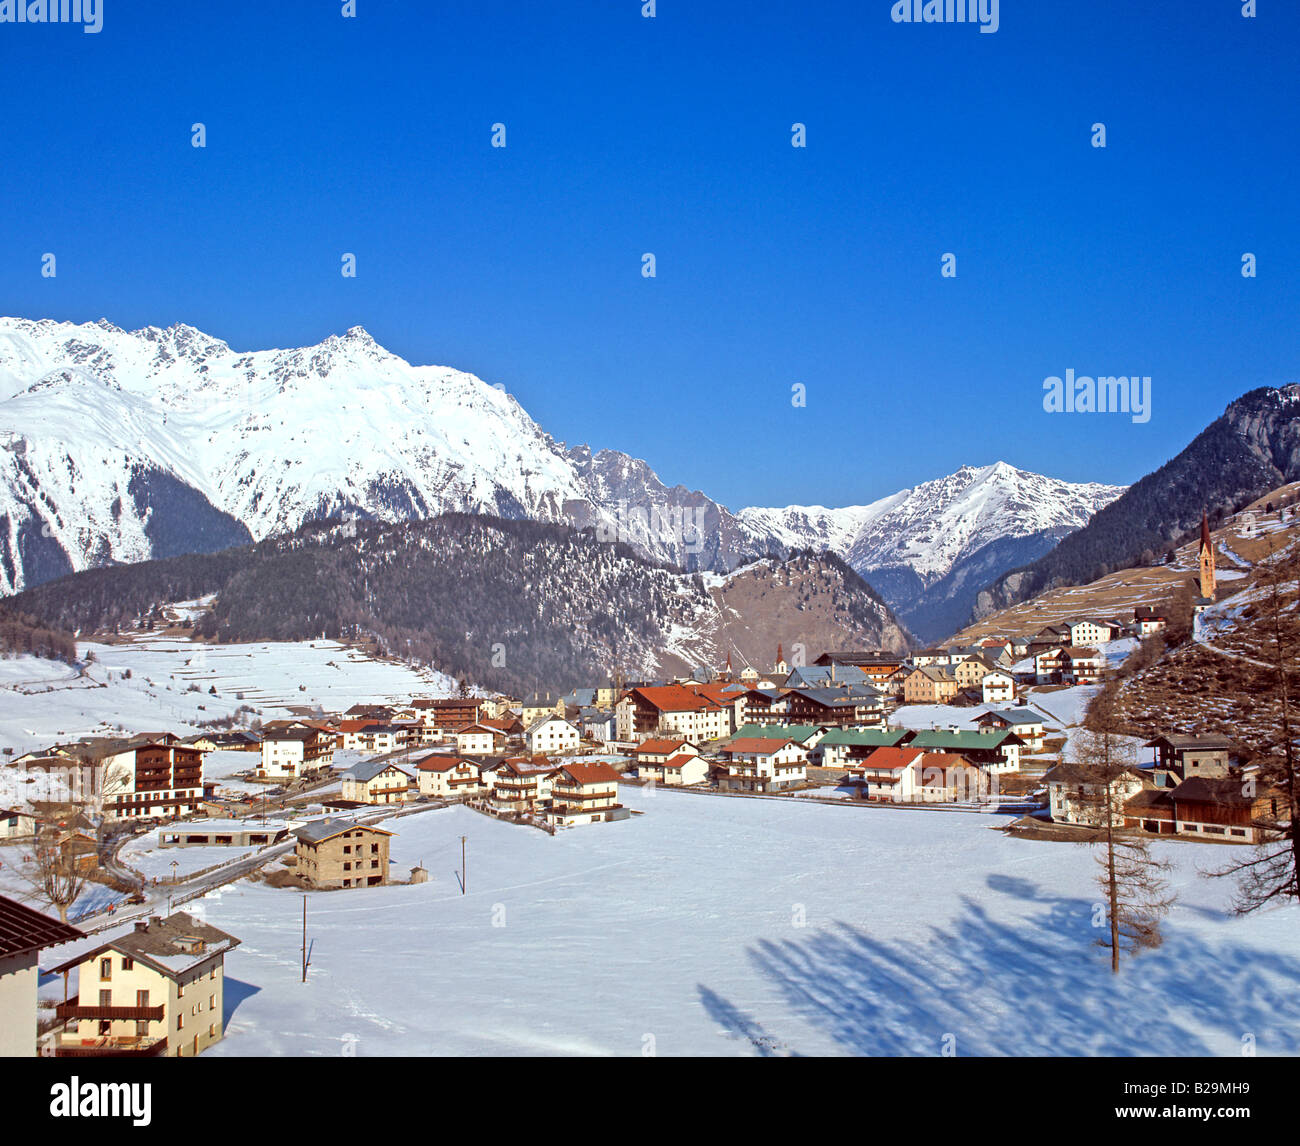 Nauders Tirol Austria Ref WP STRANGE 3667 COMPULSORY CREDIT World Pictures Photoshot Stock Photo